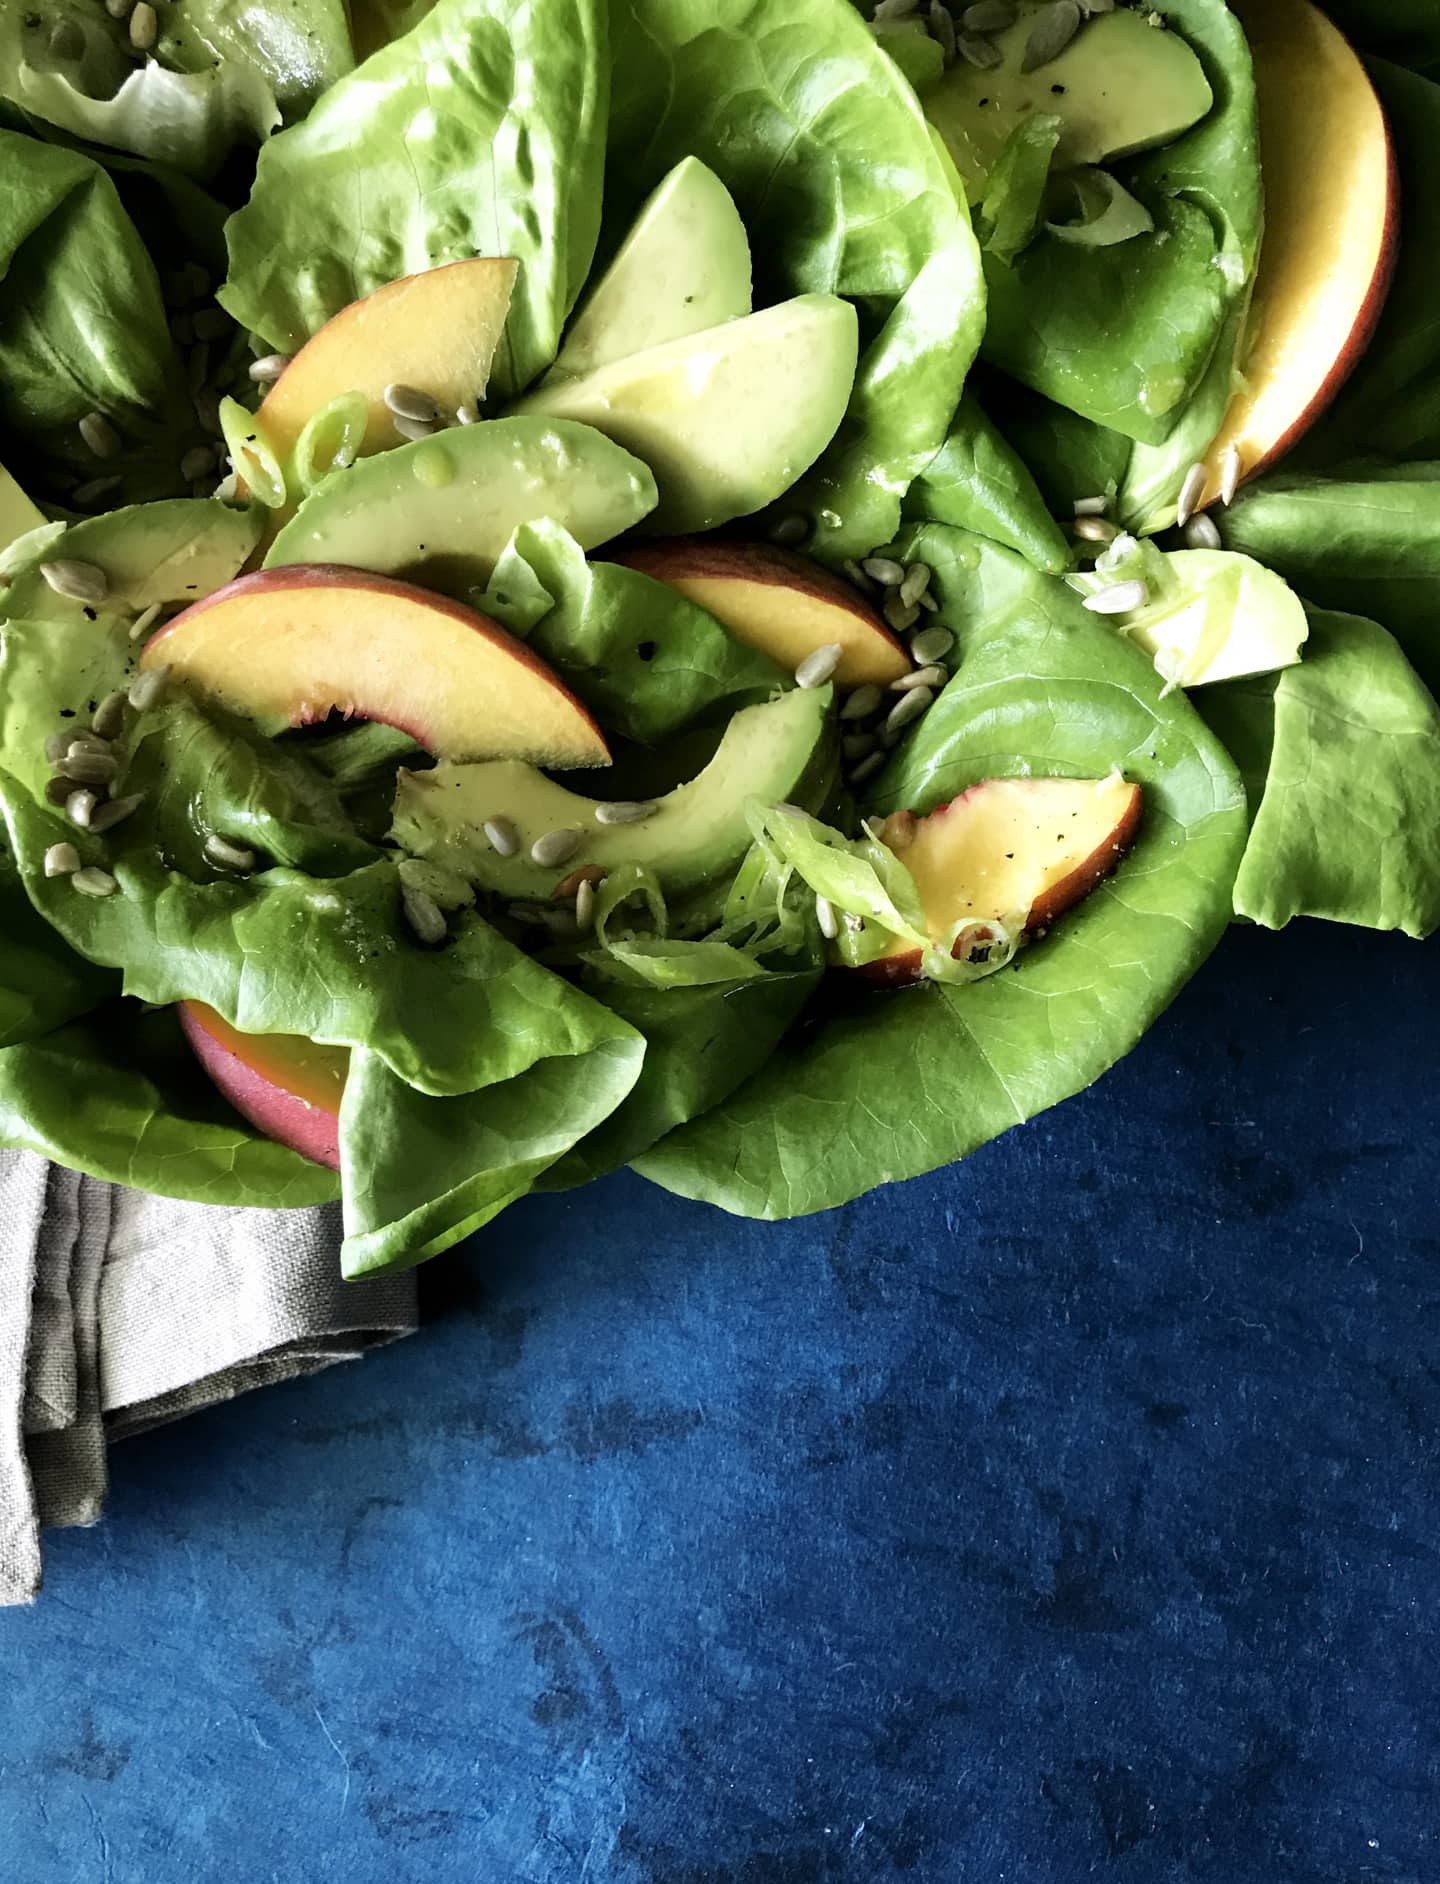 Avocado Peach Summer Salad